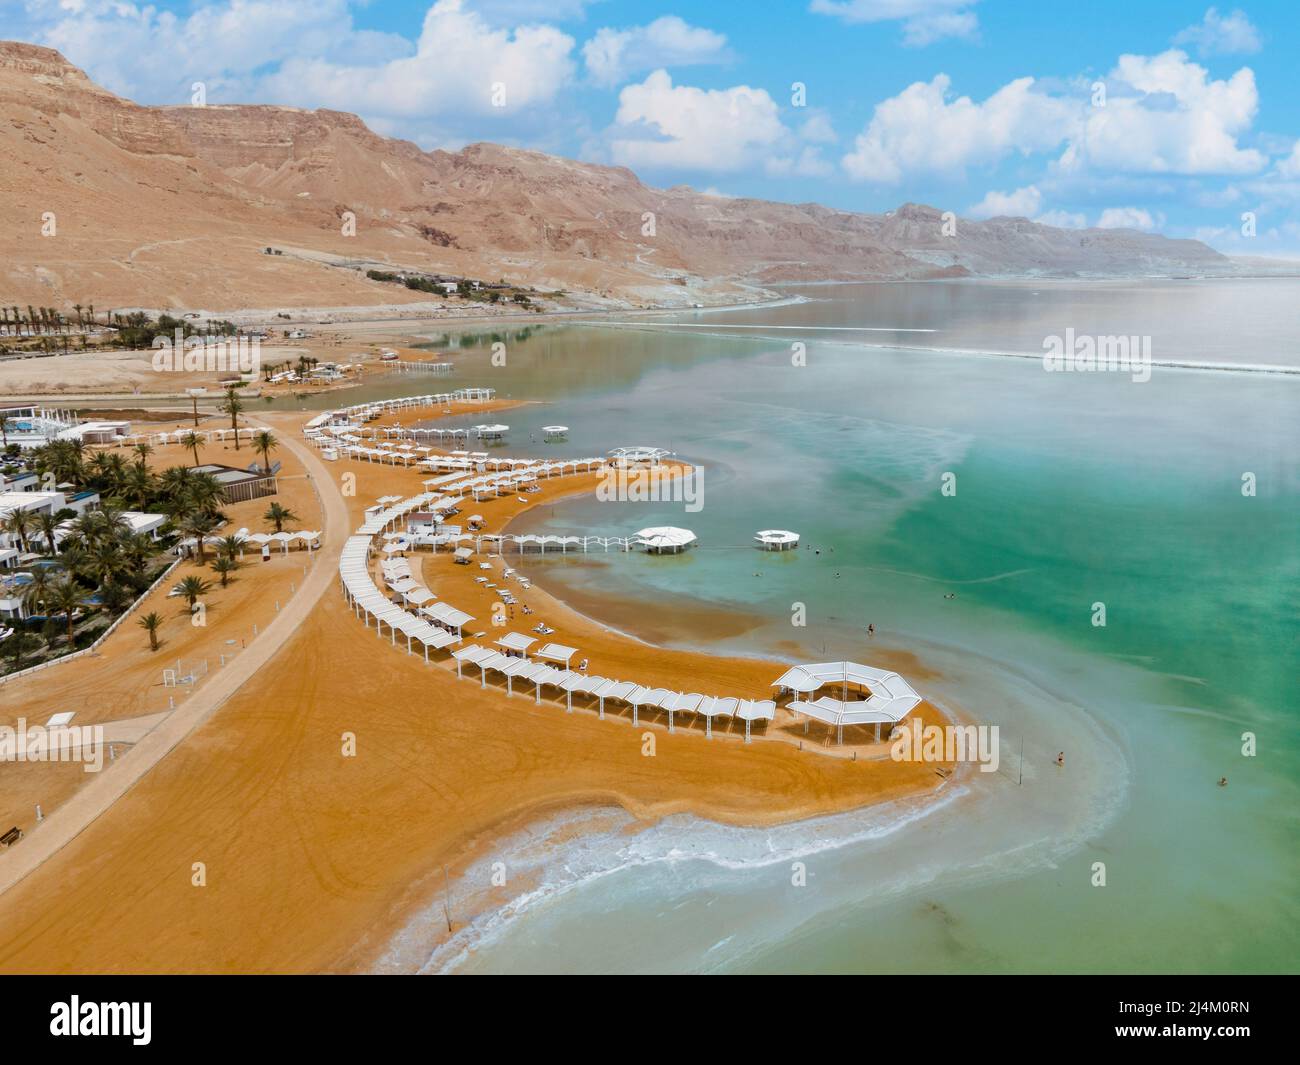 Dead sea beach shore tourist hotels, salt water, daylight Ein Bokek aerial view Stock Photo